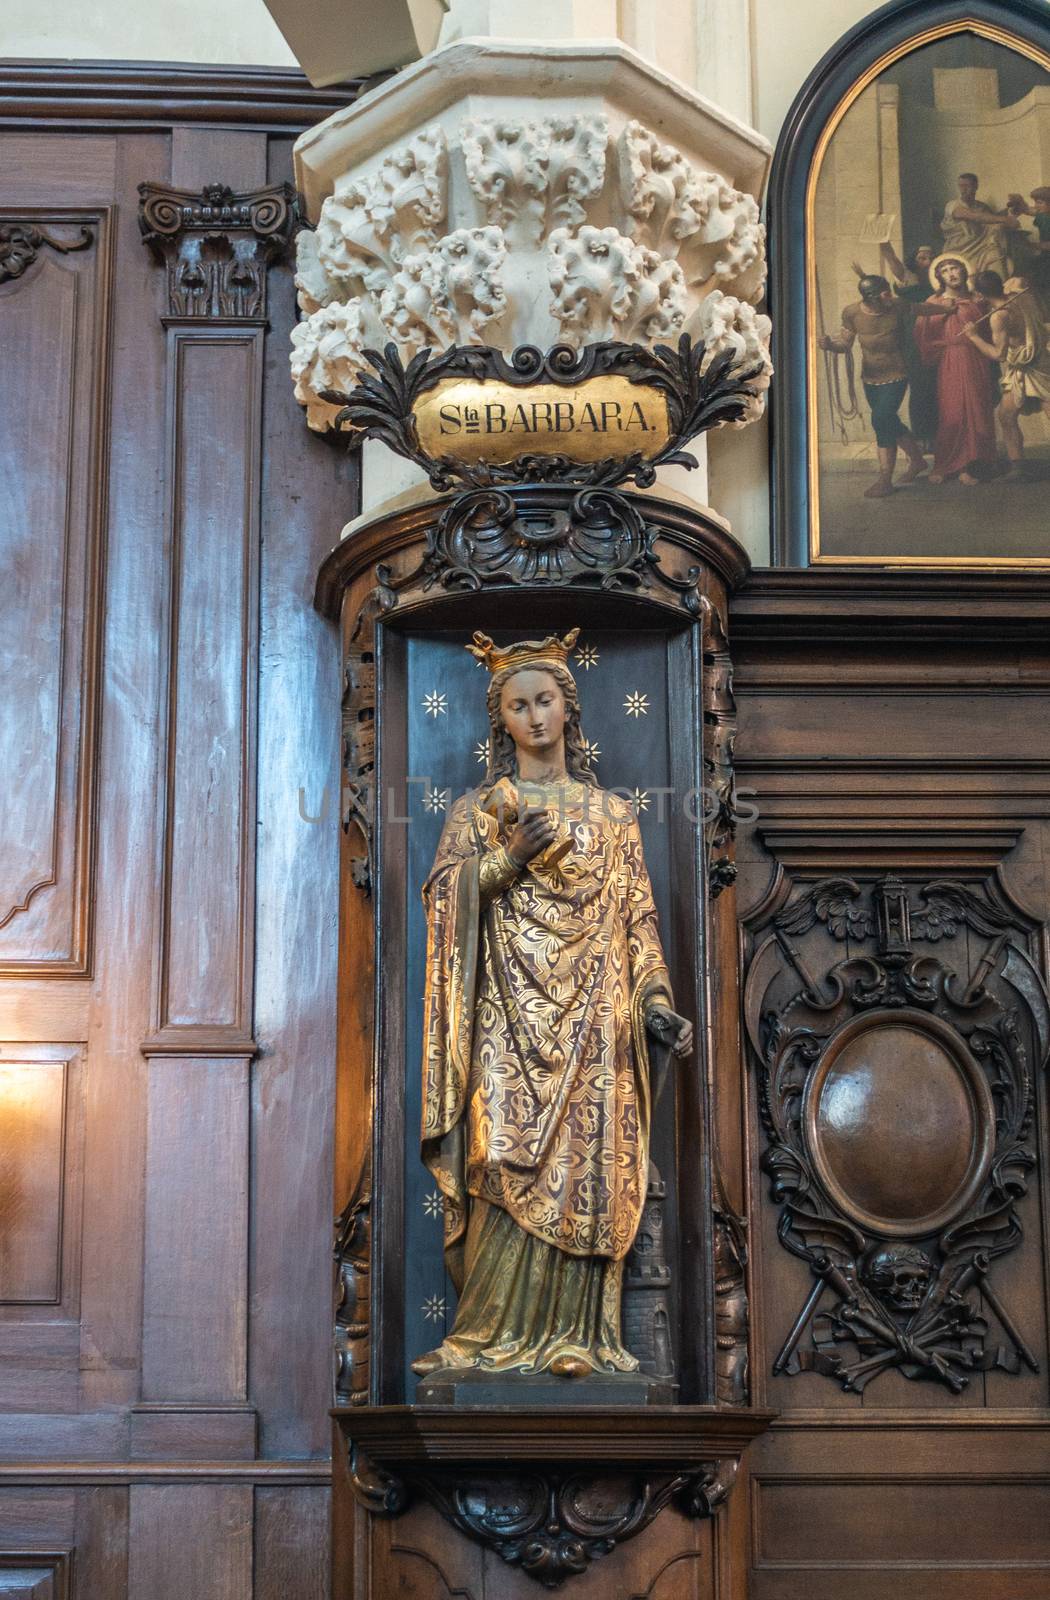 Santa Barbara Satue in Saint Nicolas church, Brussels Belgium. by Claudine